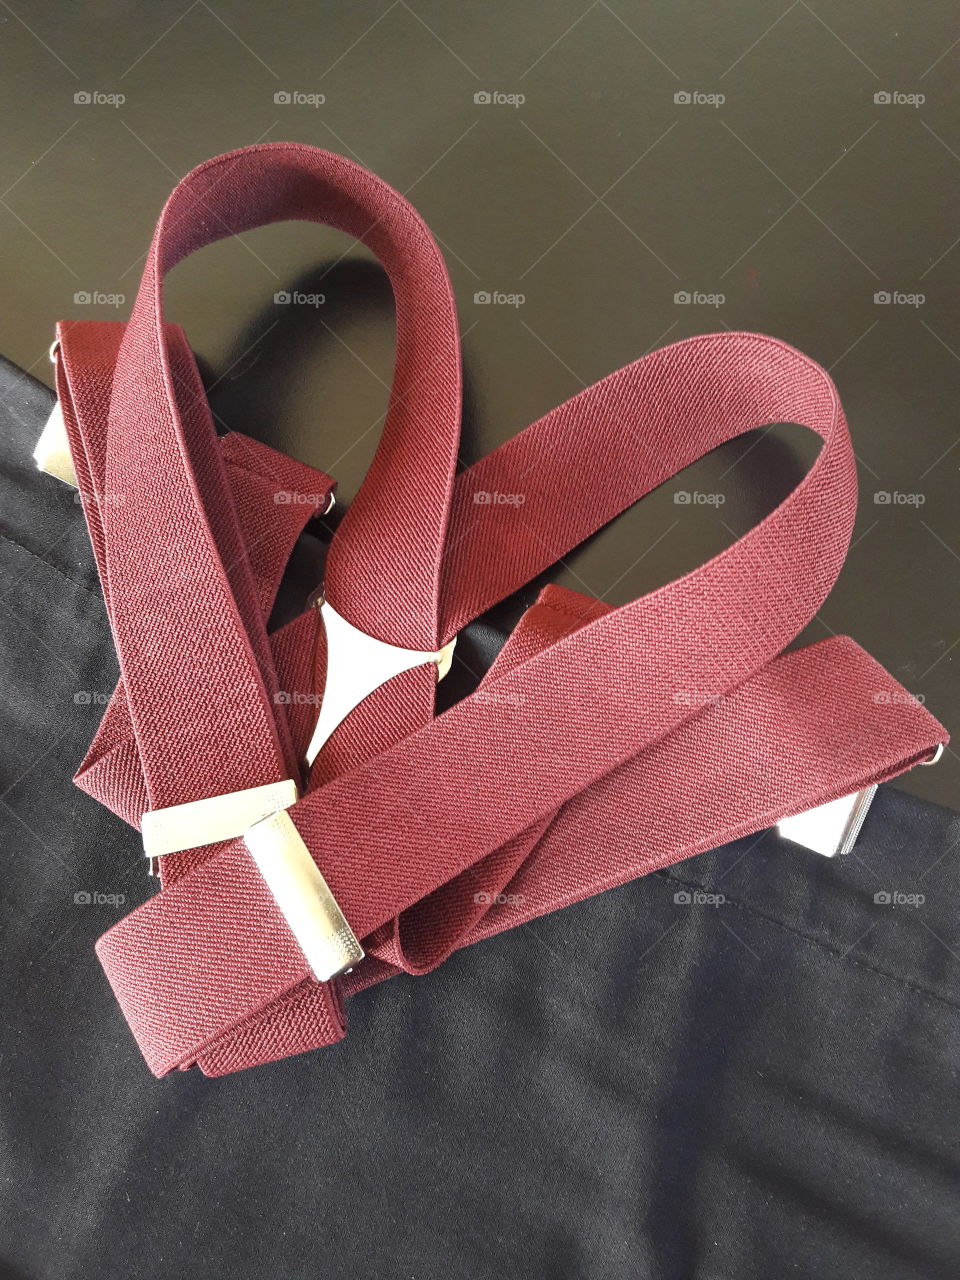 Close-up of suspenders strap